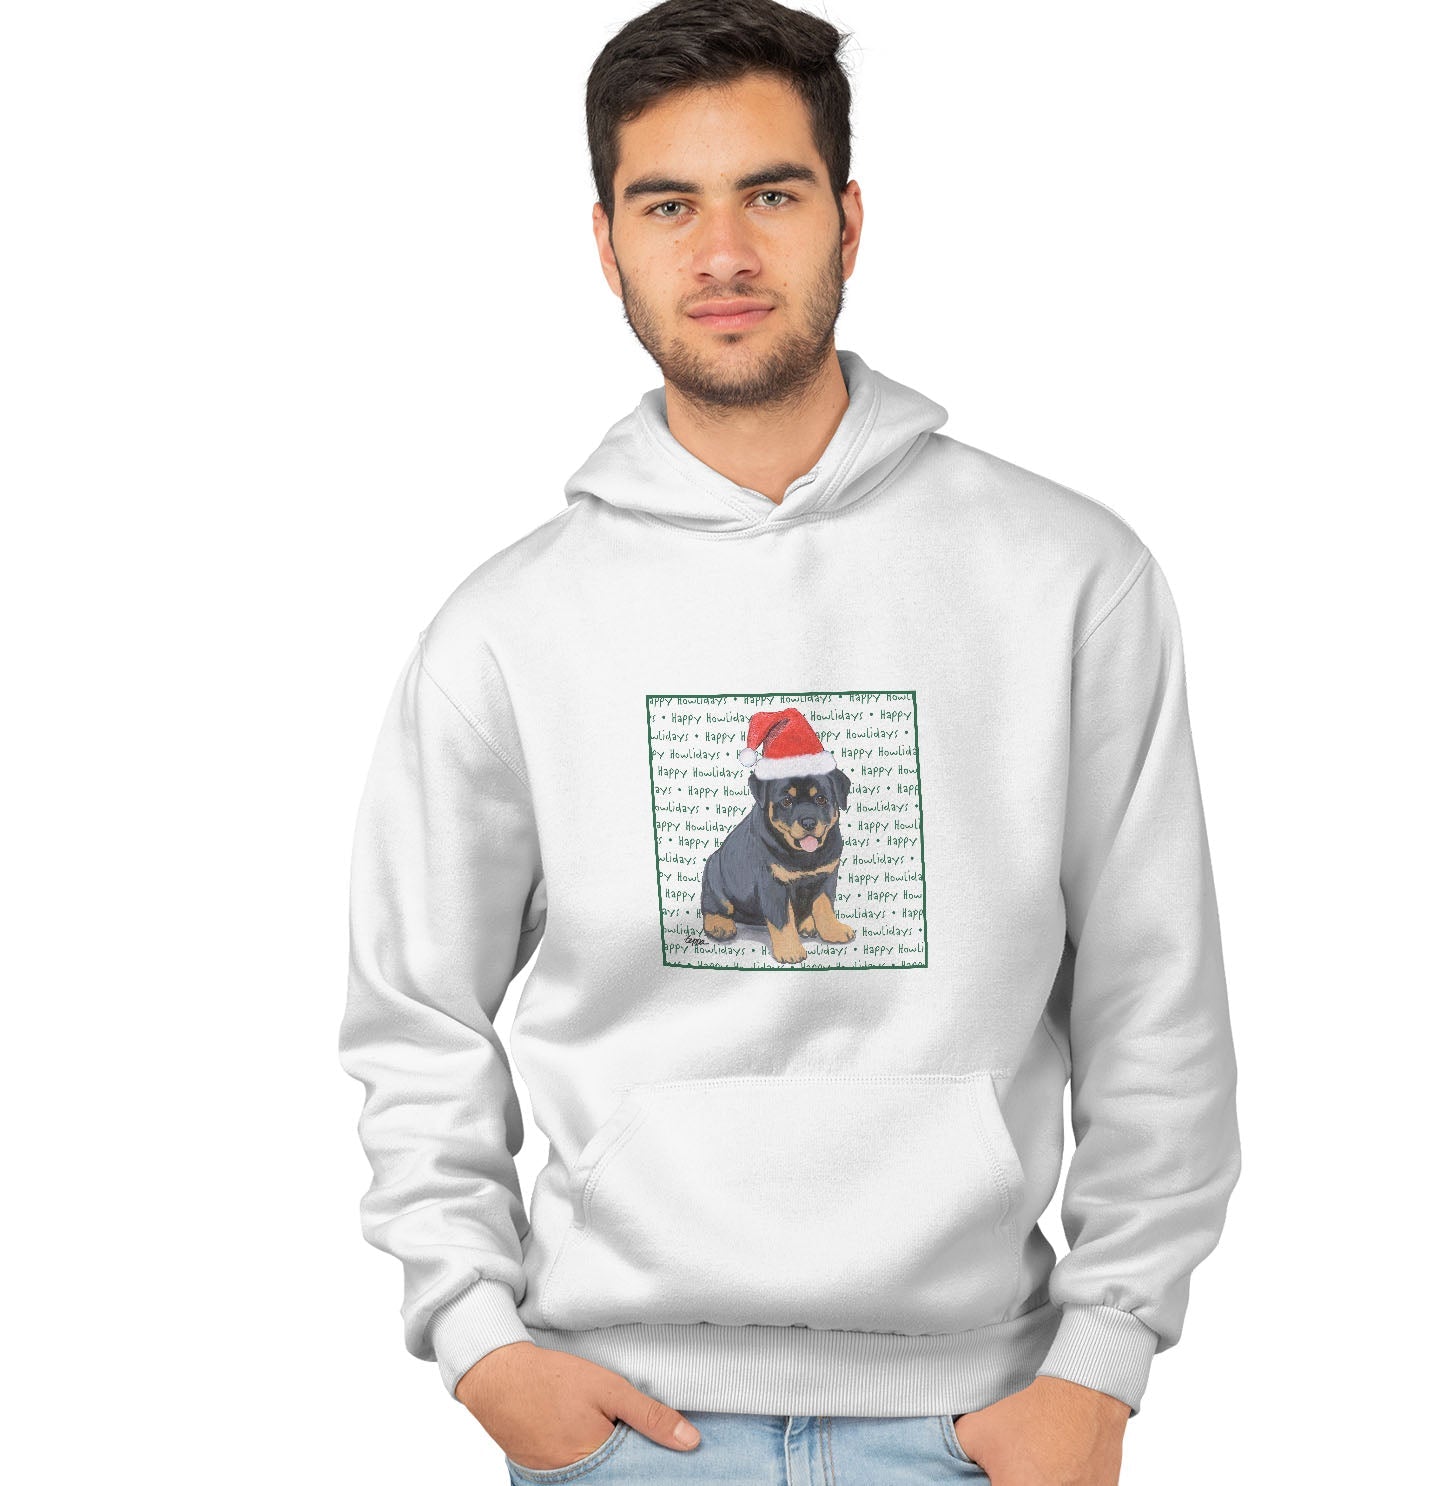 Rottweiler Puppy Happy Howlidays Text - Adult Unisex Hoodie Sweatshirt